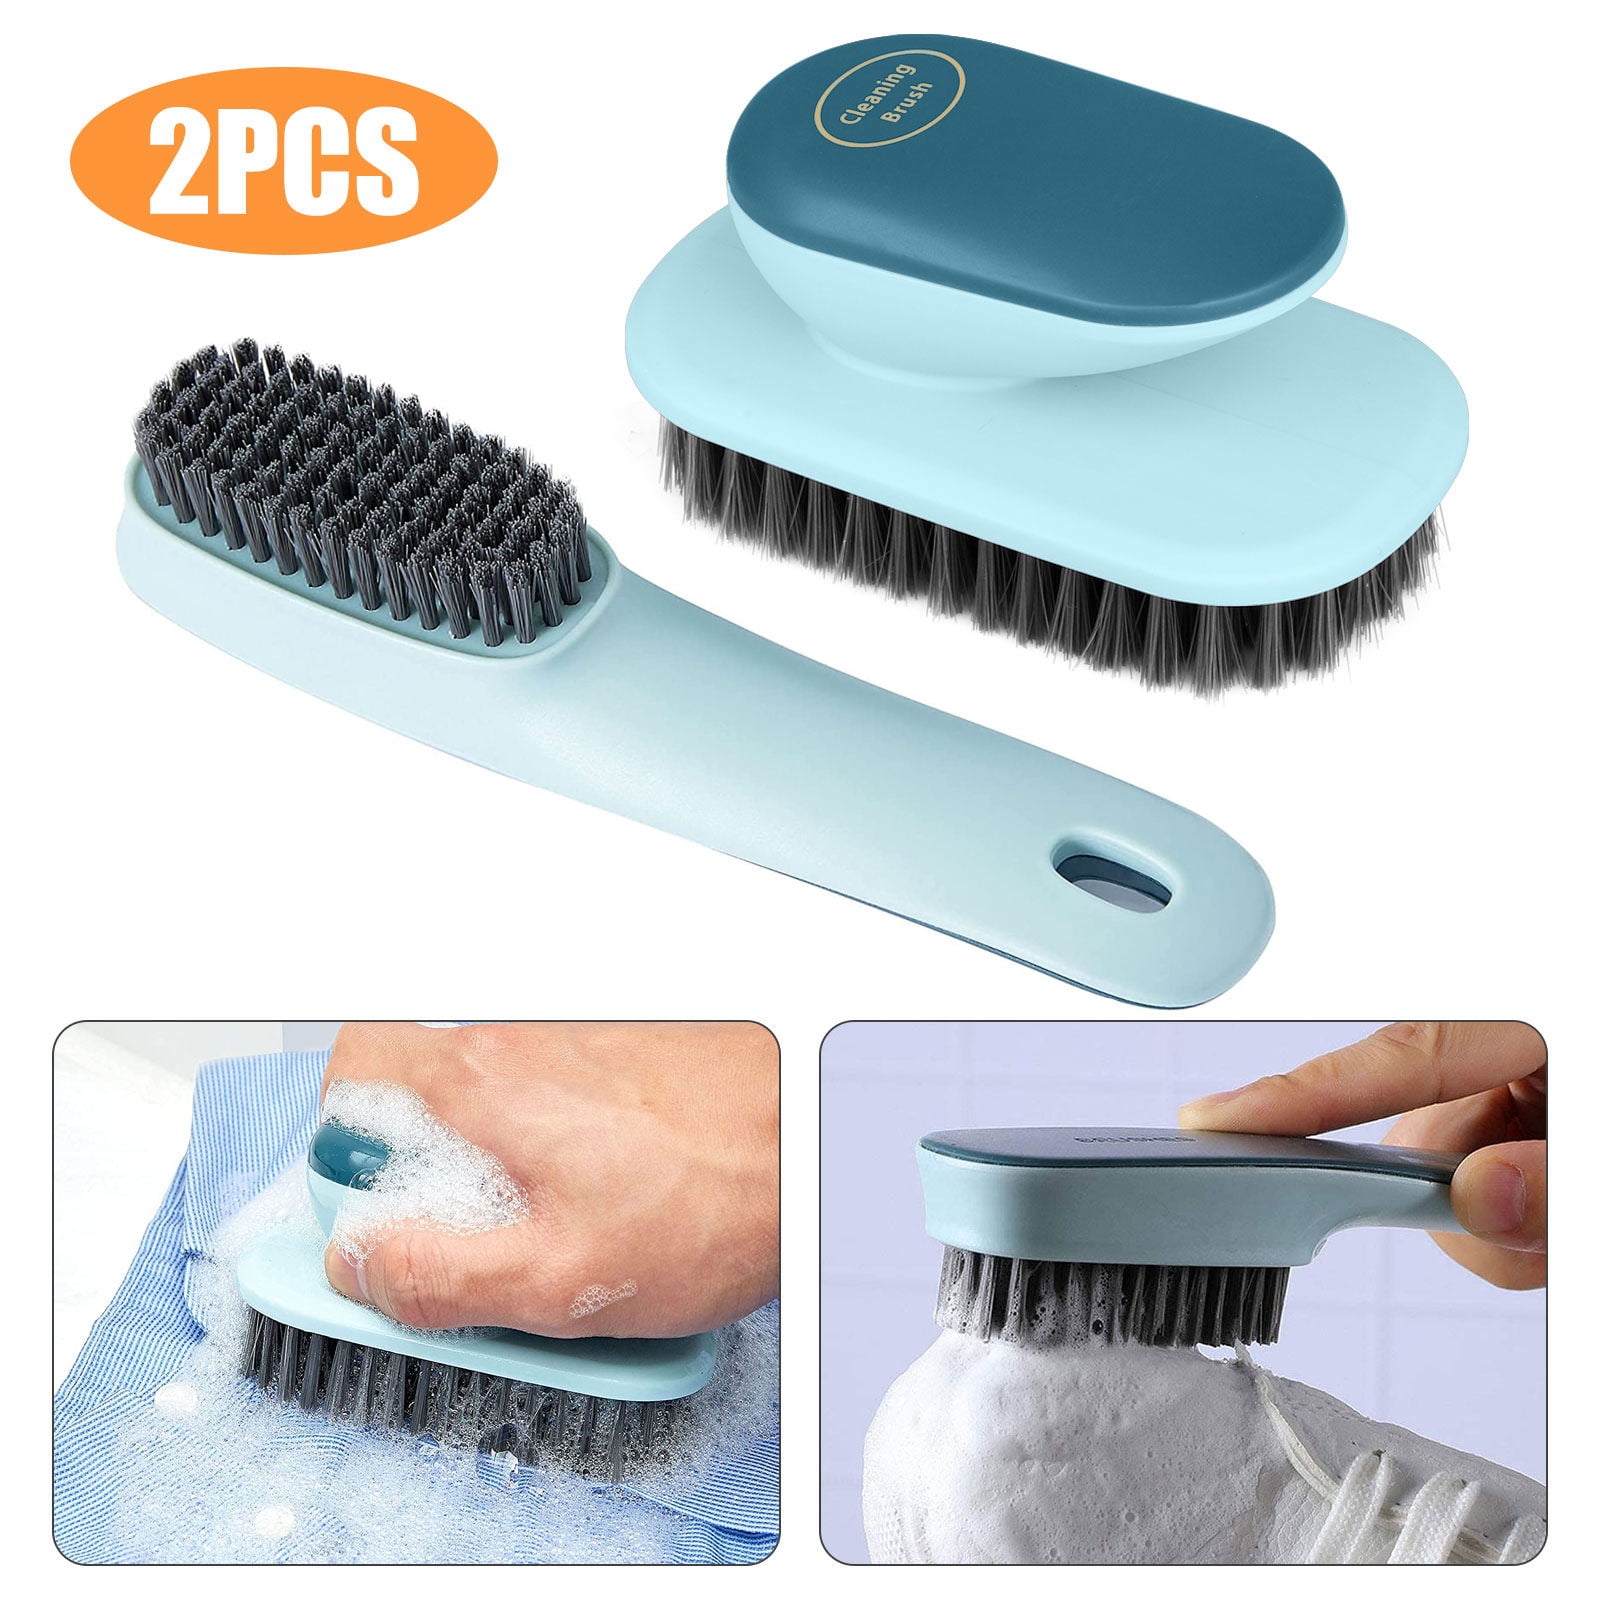 3 PCS Shoes Brush Kit, Laundry Brush Set, Cleaning Brushes, Long